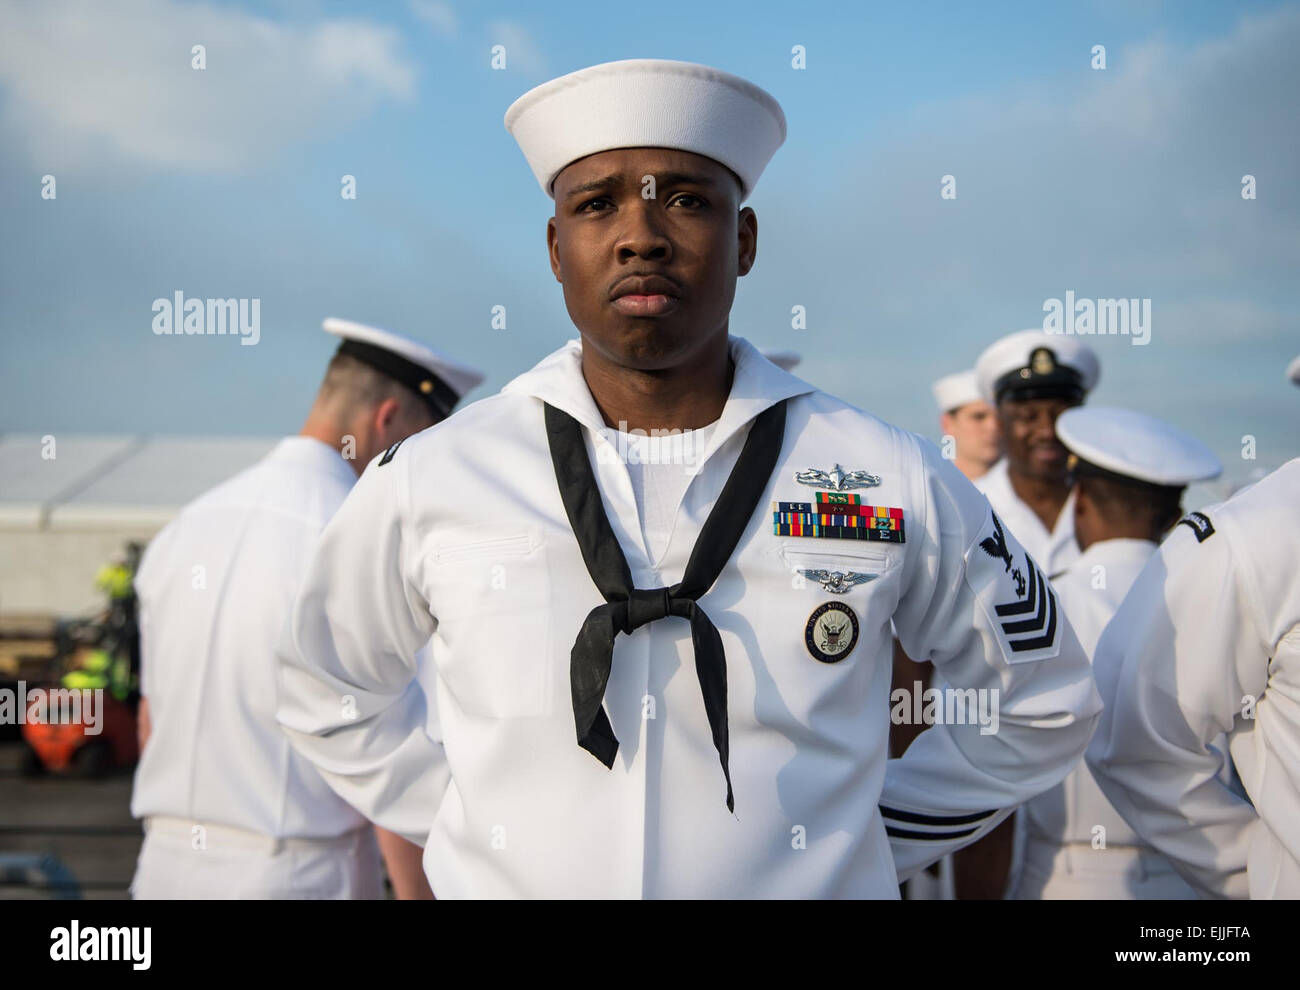 Sailor uniform hi-res stock photography and images - Alamy